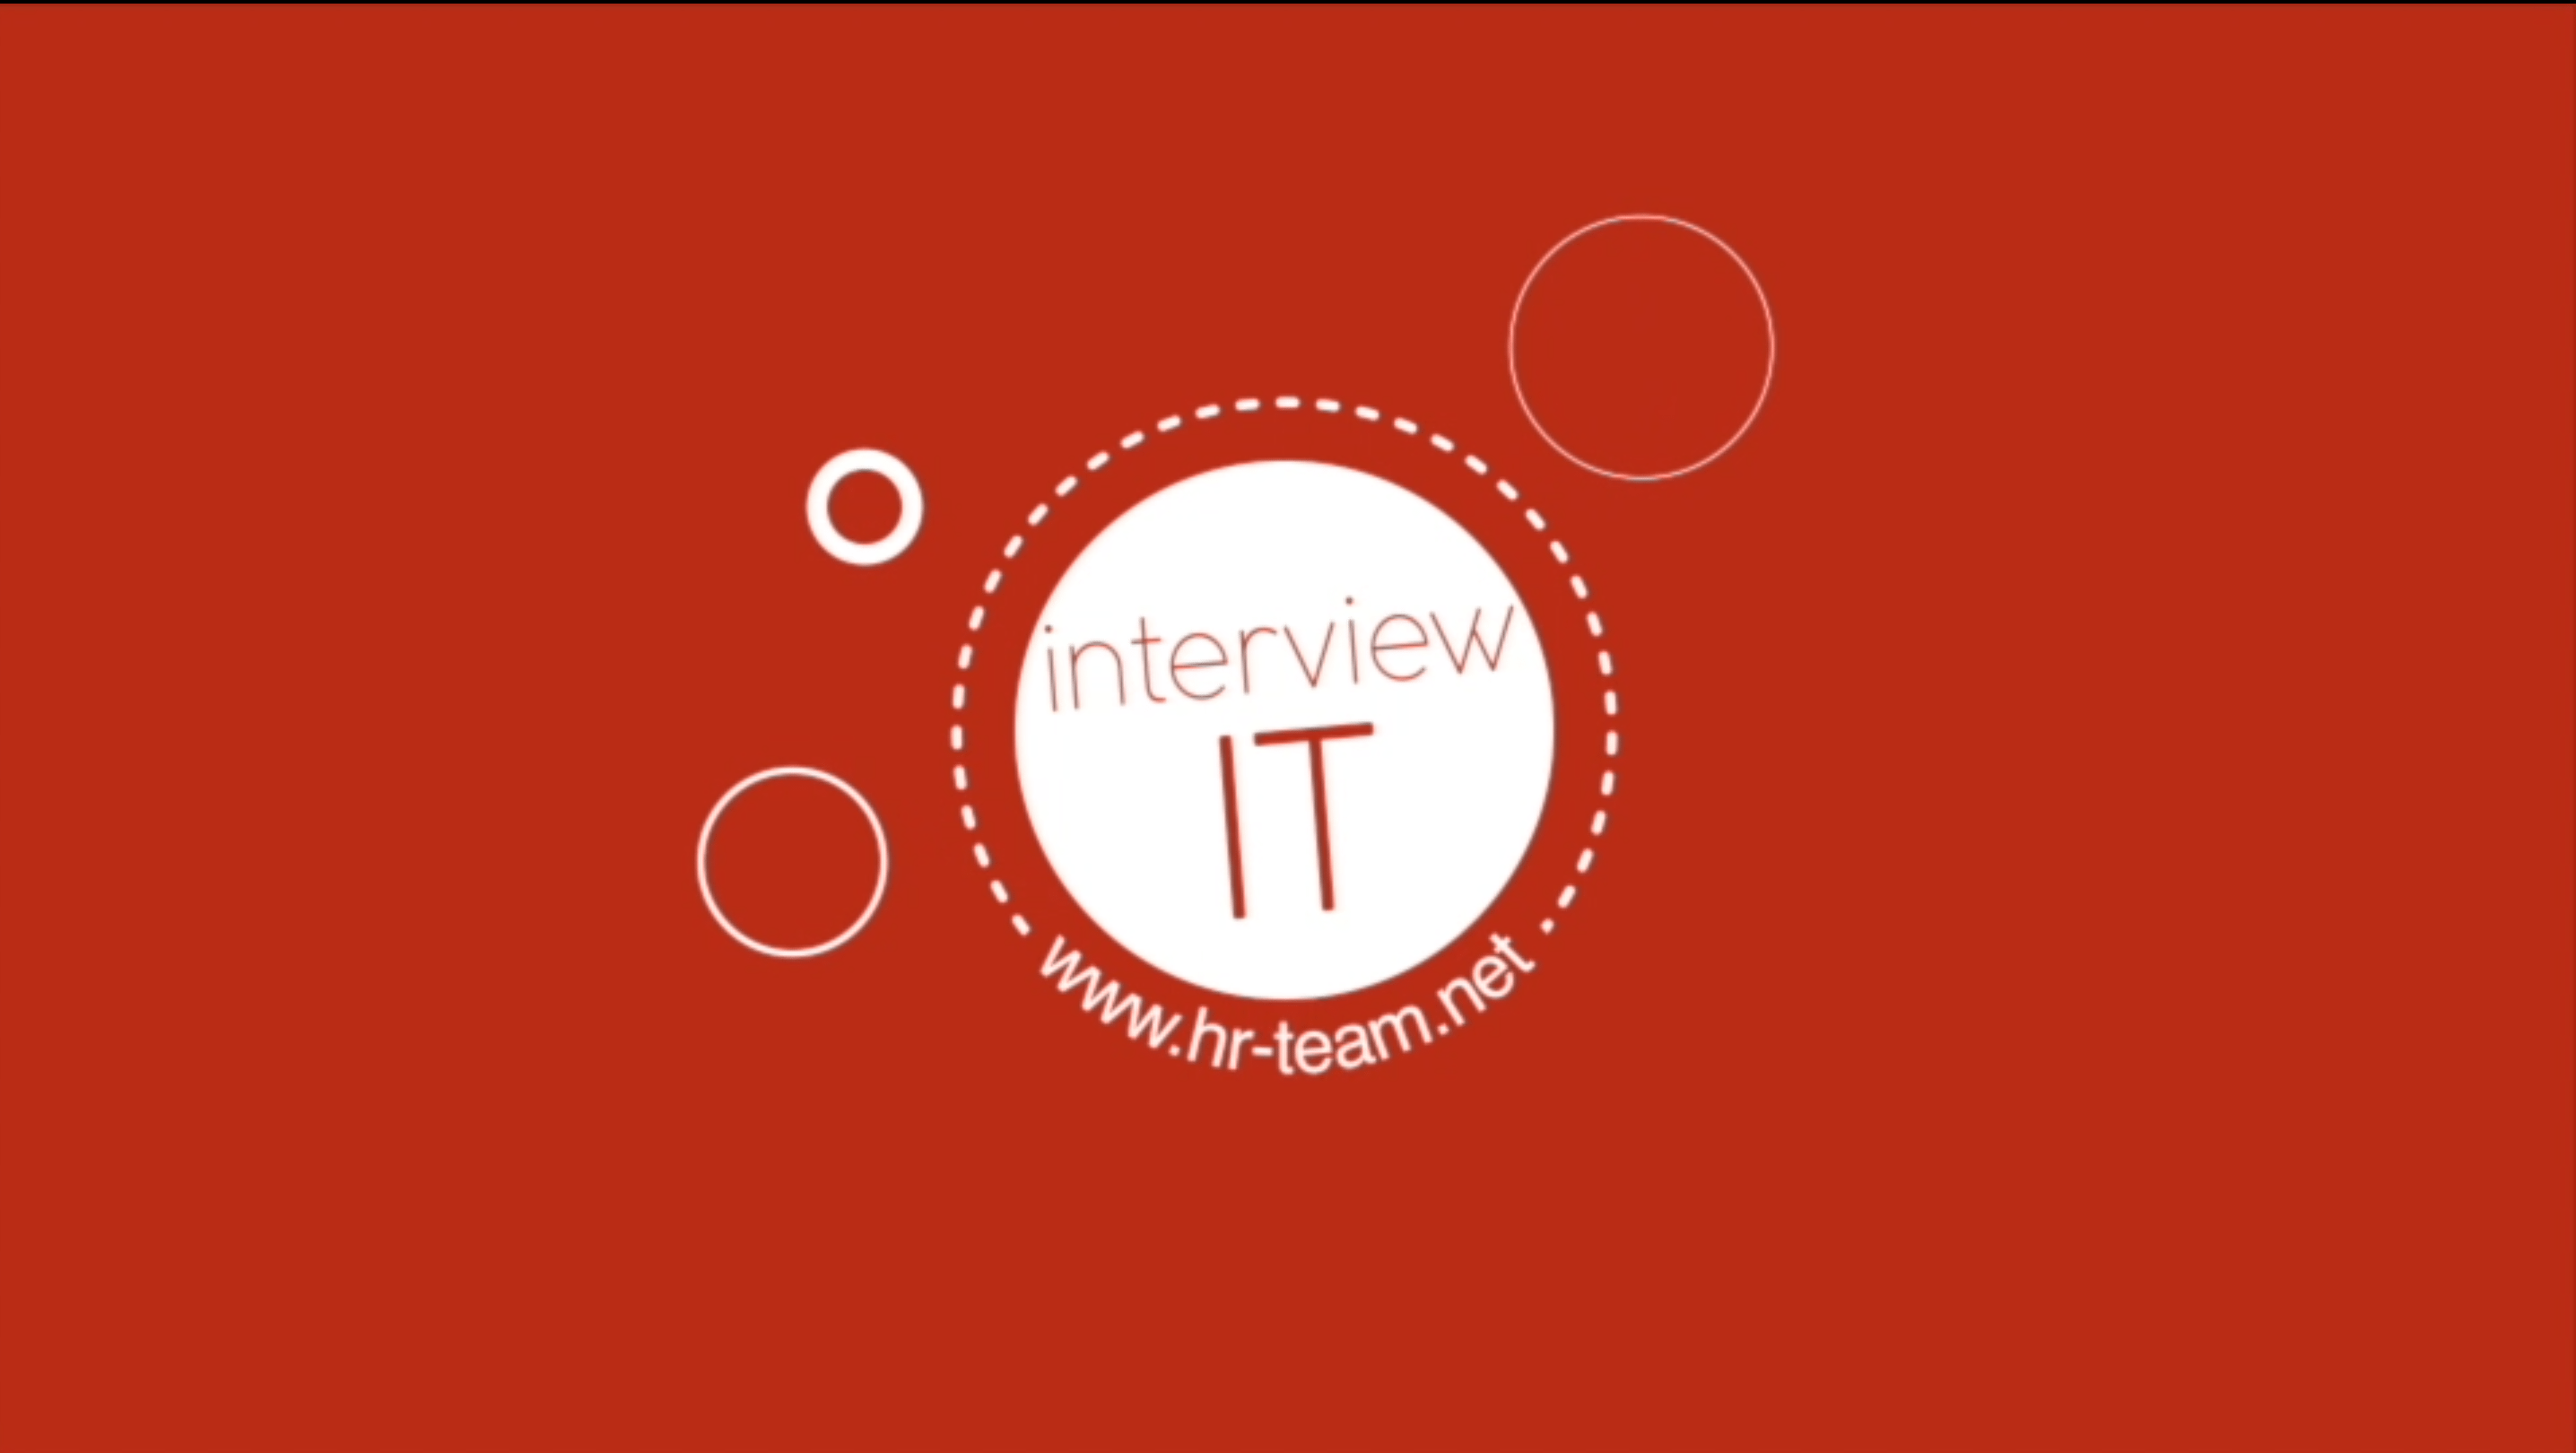 #interviewIT : HR Team Recruitment Officer